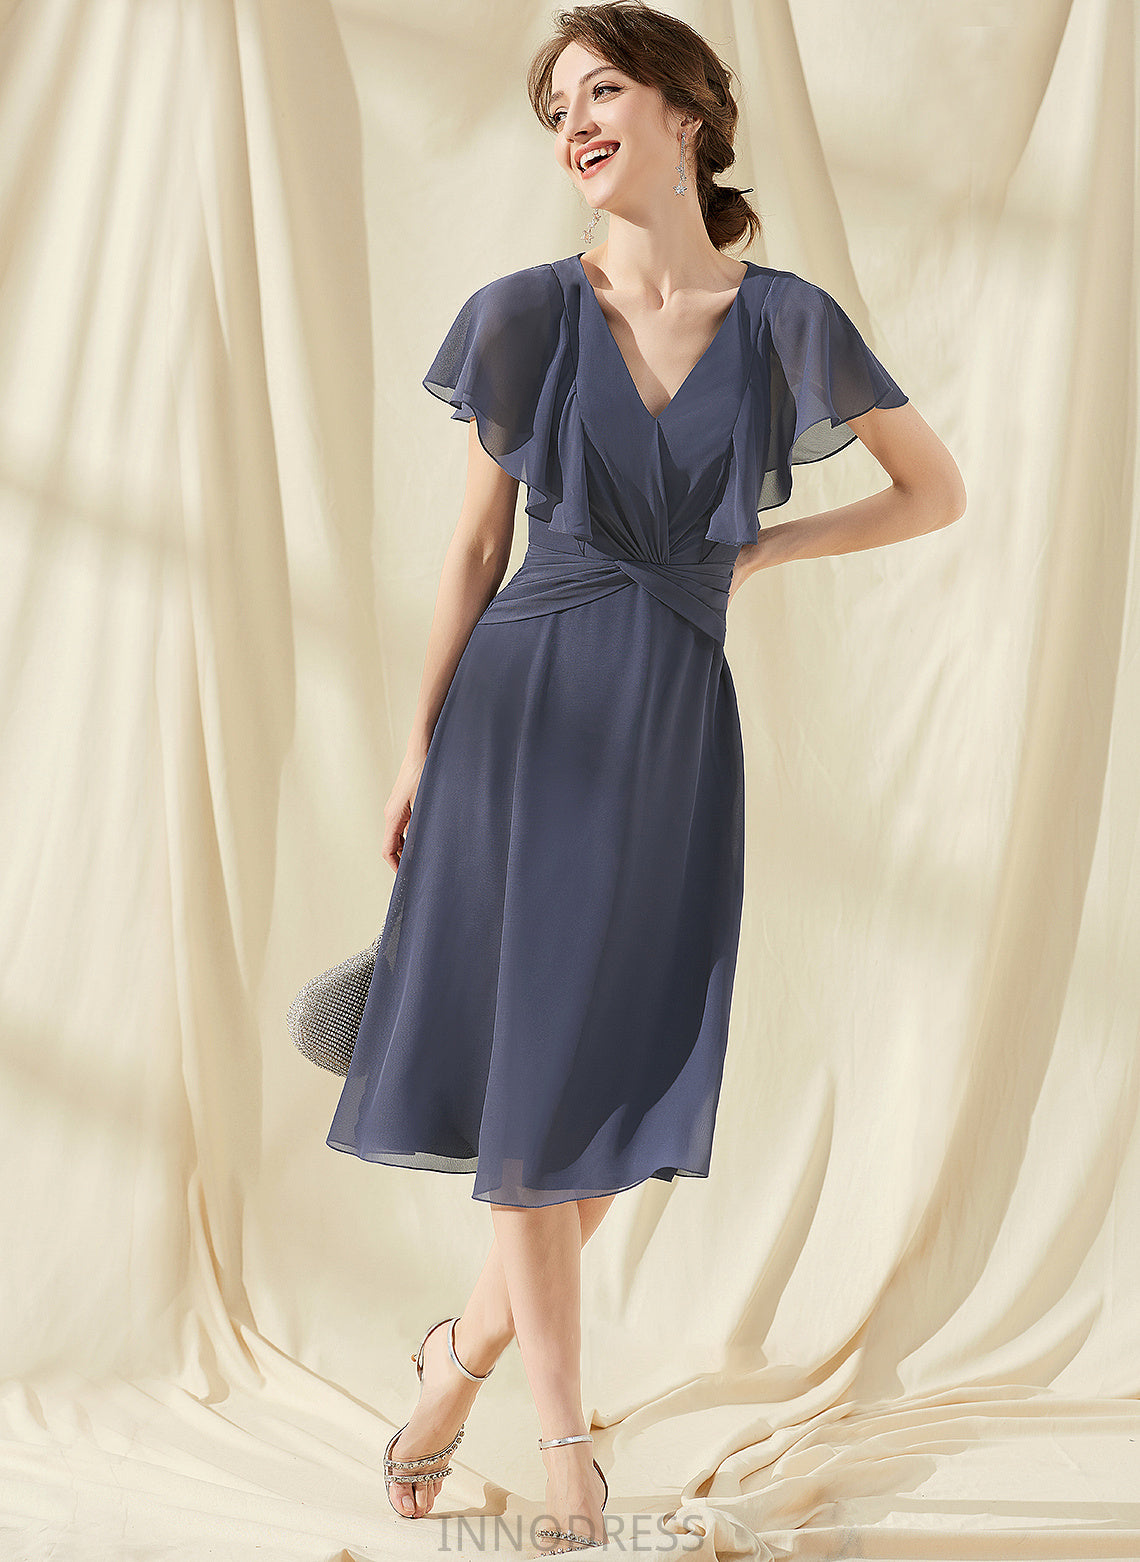 Embellishment Fabric Ruffle Length A-Line V-neck Knee-Length Silhouette Neckline Keely V-Neck Sleeveless